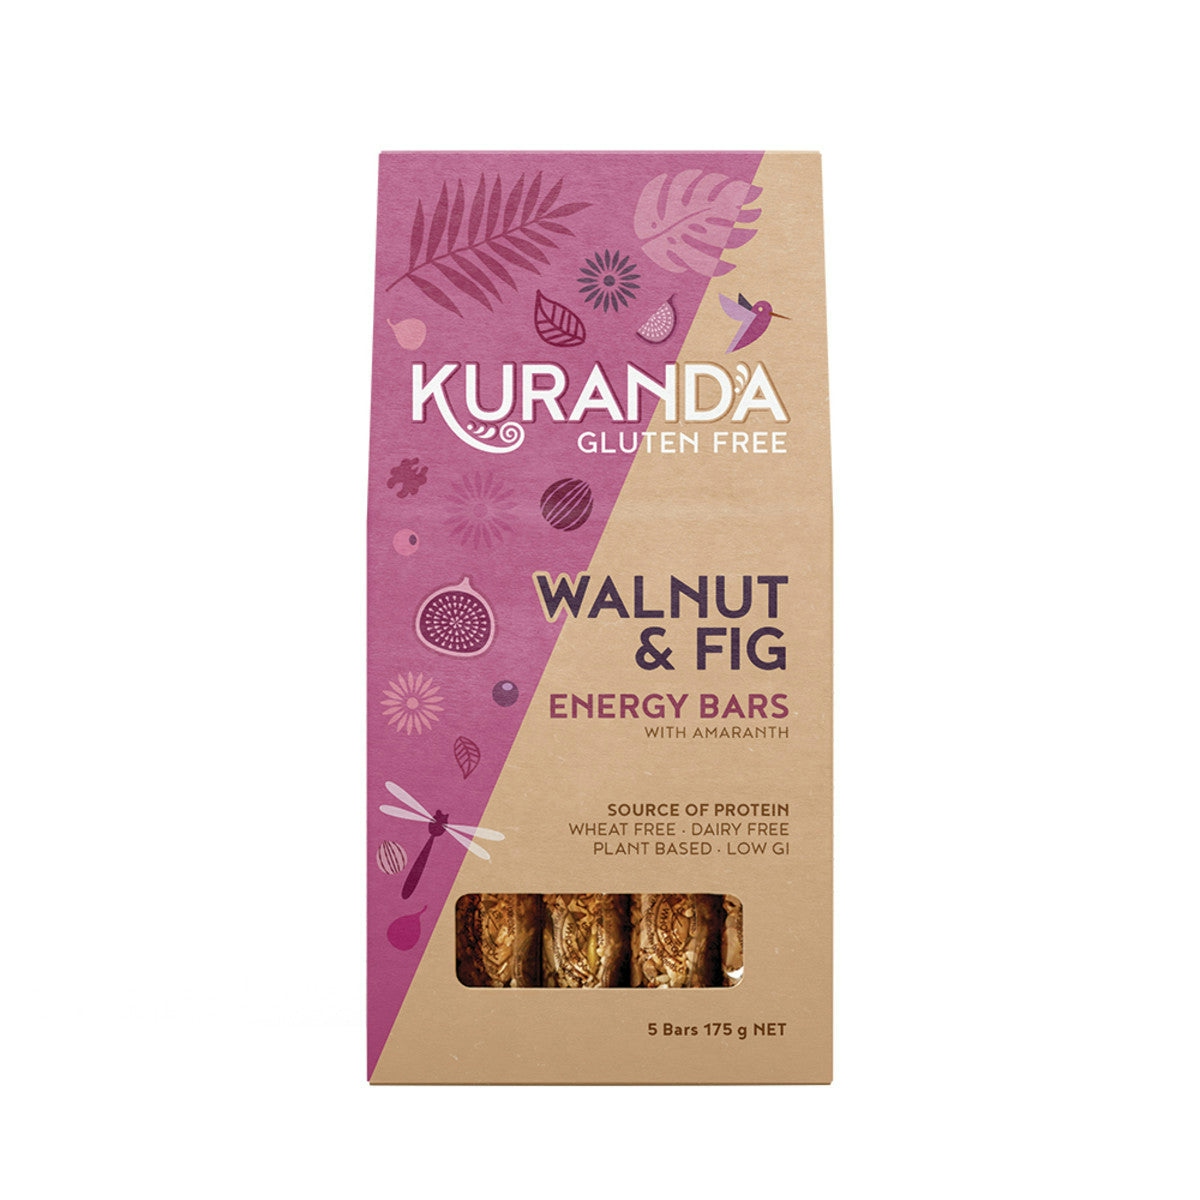 image of Kuranda Gluten Free Energy Bars Walnut & Fig 35g x 5 Pack on white background 